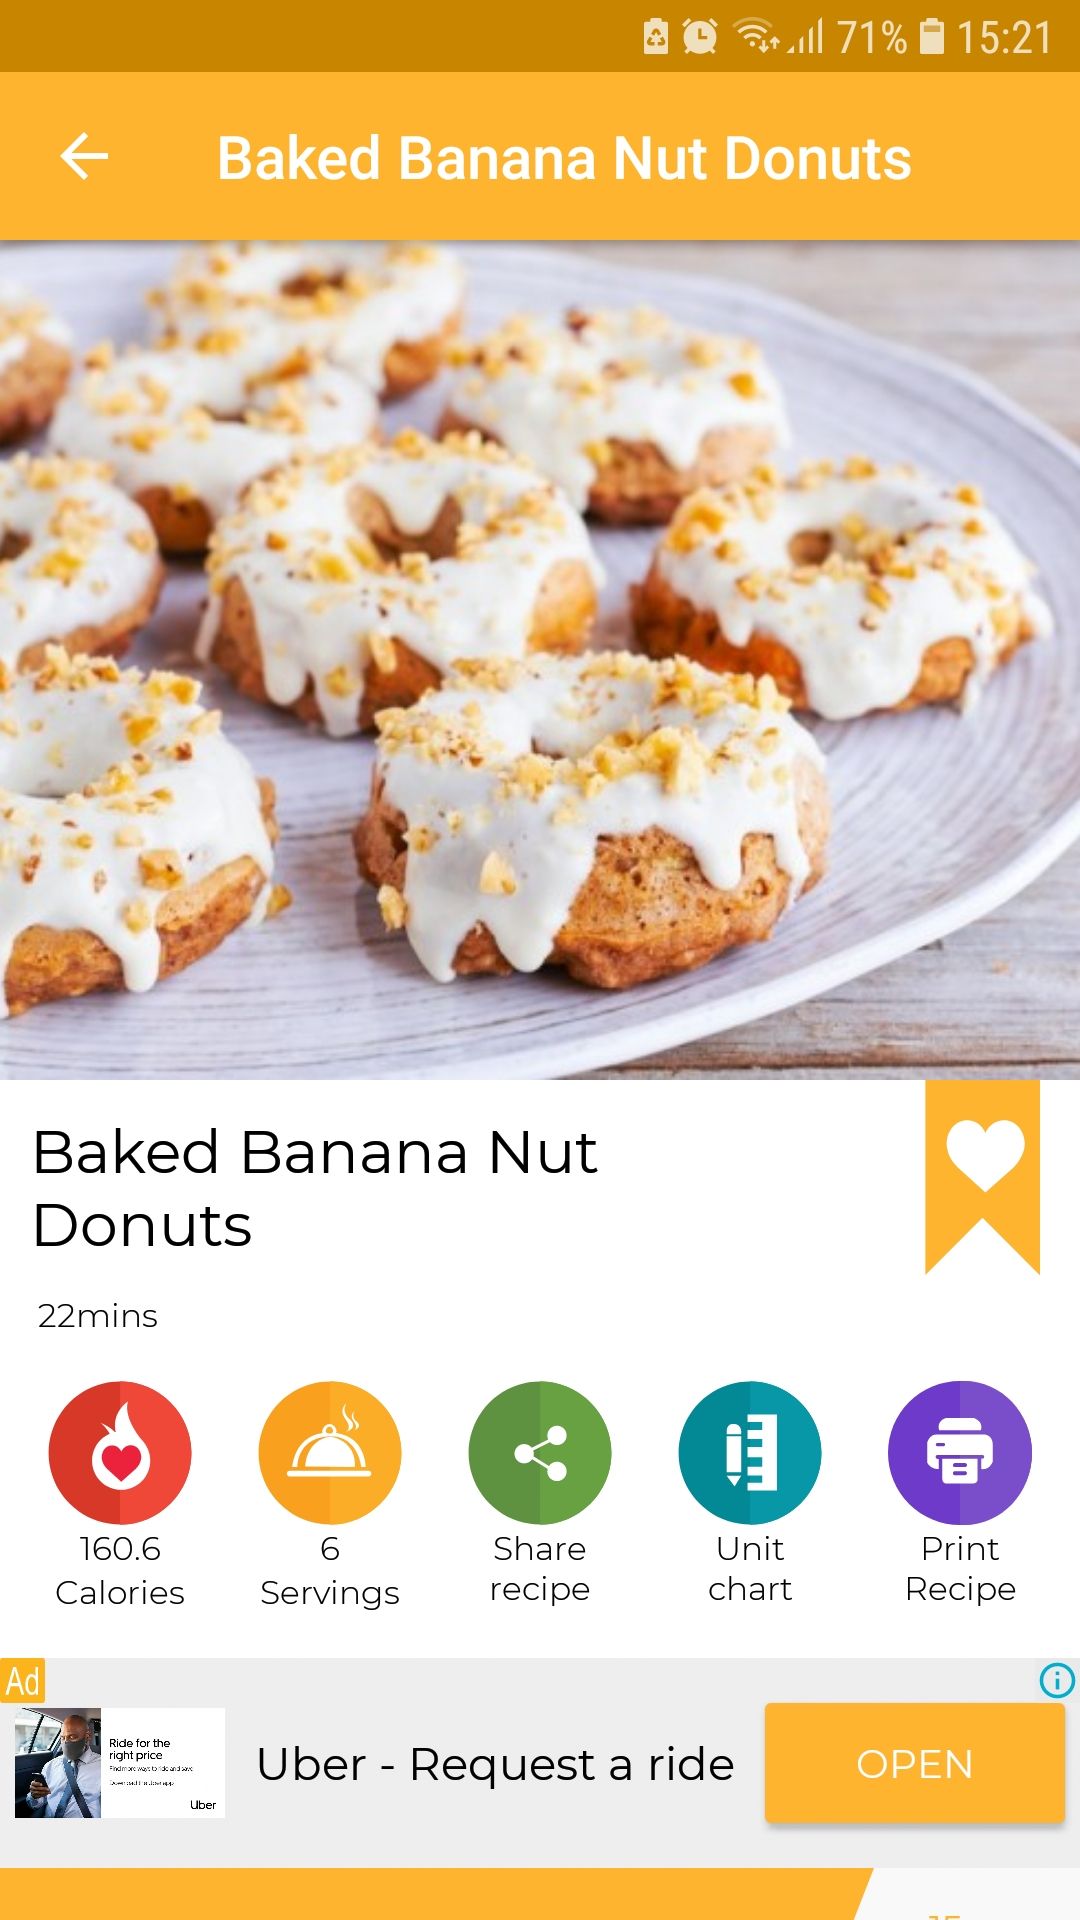 Endless Breakfast Recipes mobile recipes app banana donuts